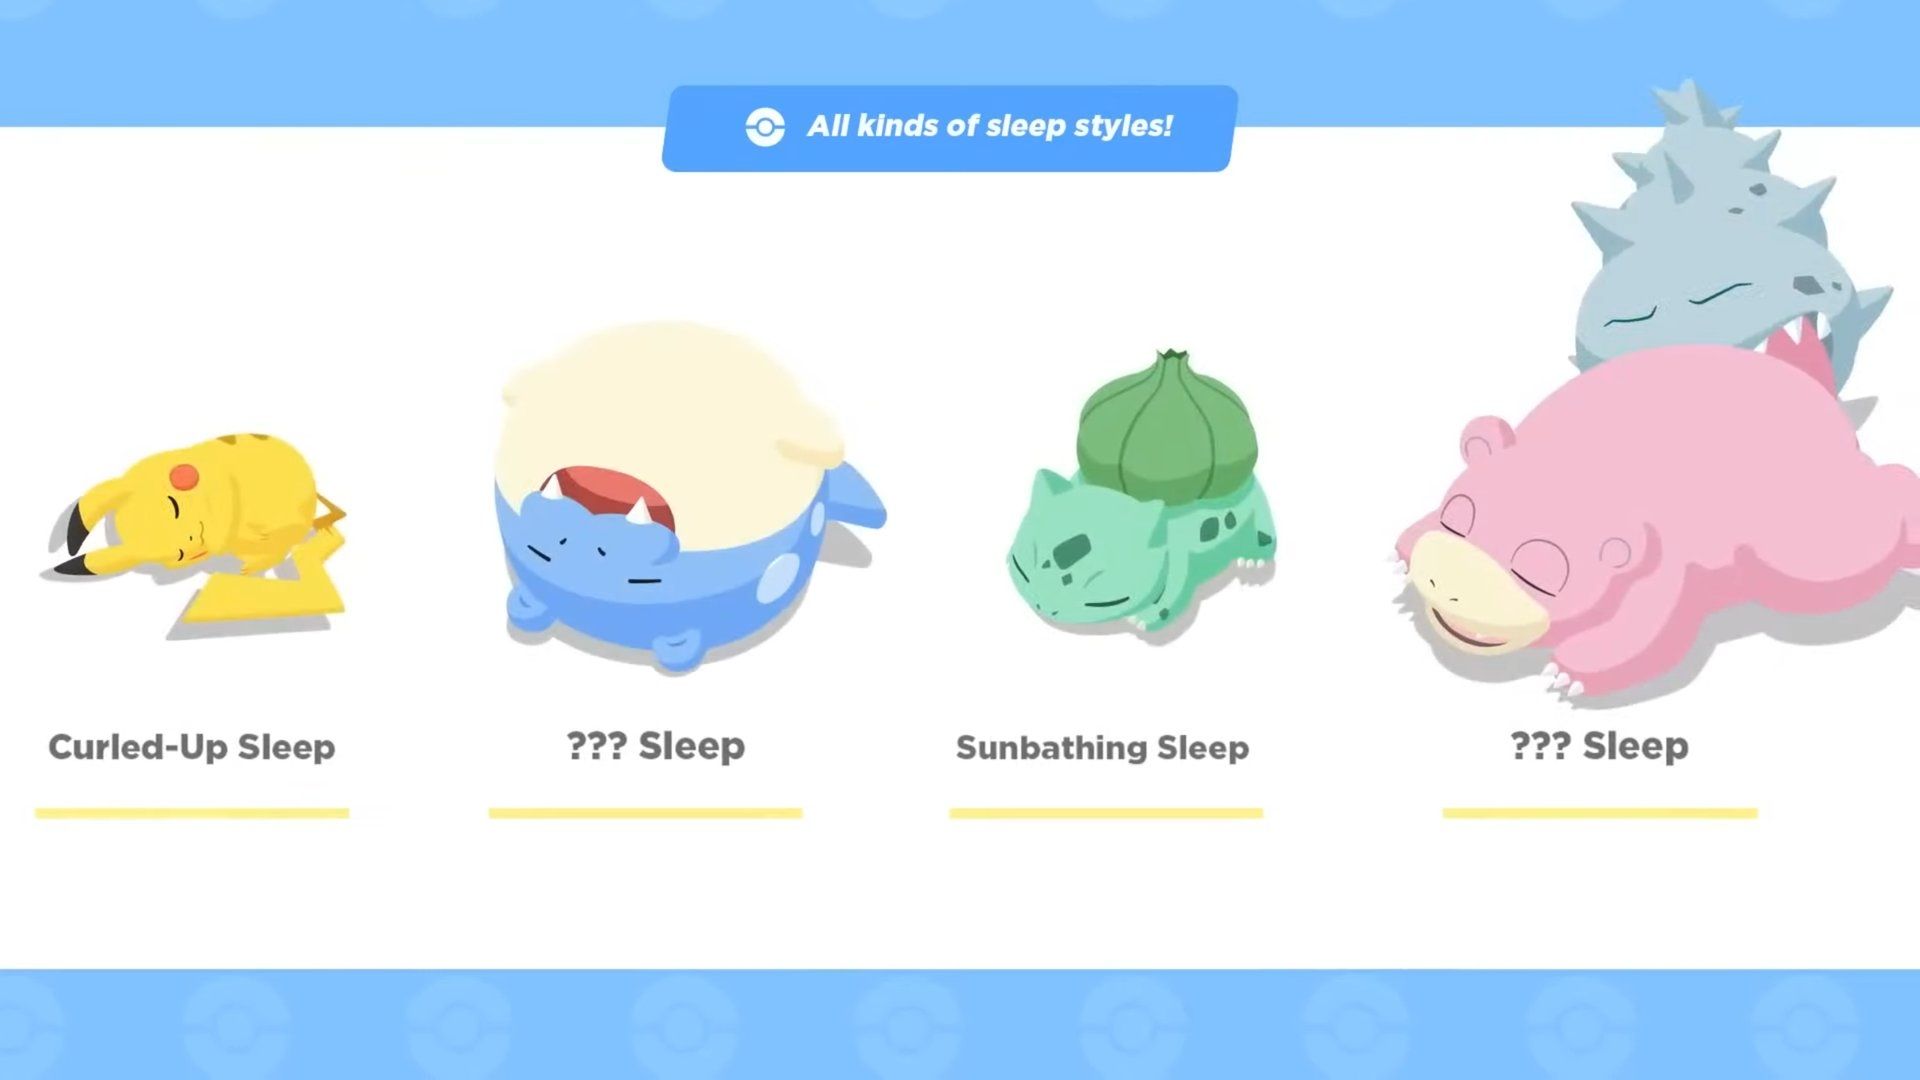 Pokemon SLEEP's alternative sleeping styles: Pikachu's Curled-Up Sleep, Spheal's ??? Sleep, Bulbasaur's Sunbathing Sleep, and Slowbro's ??? Sleep.